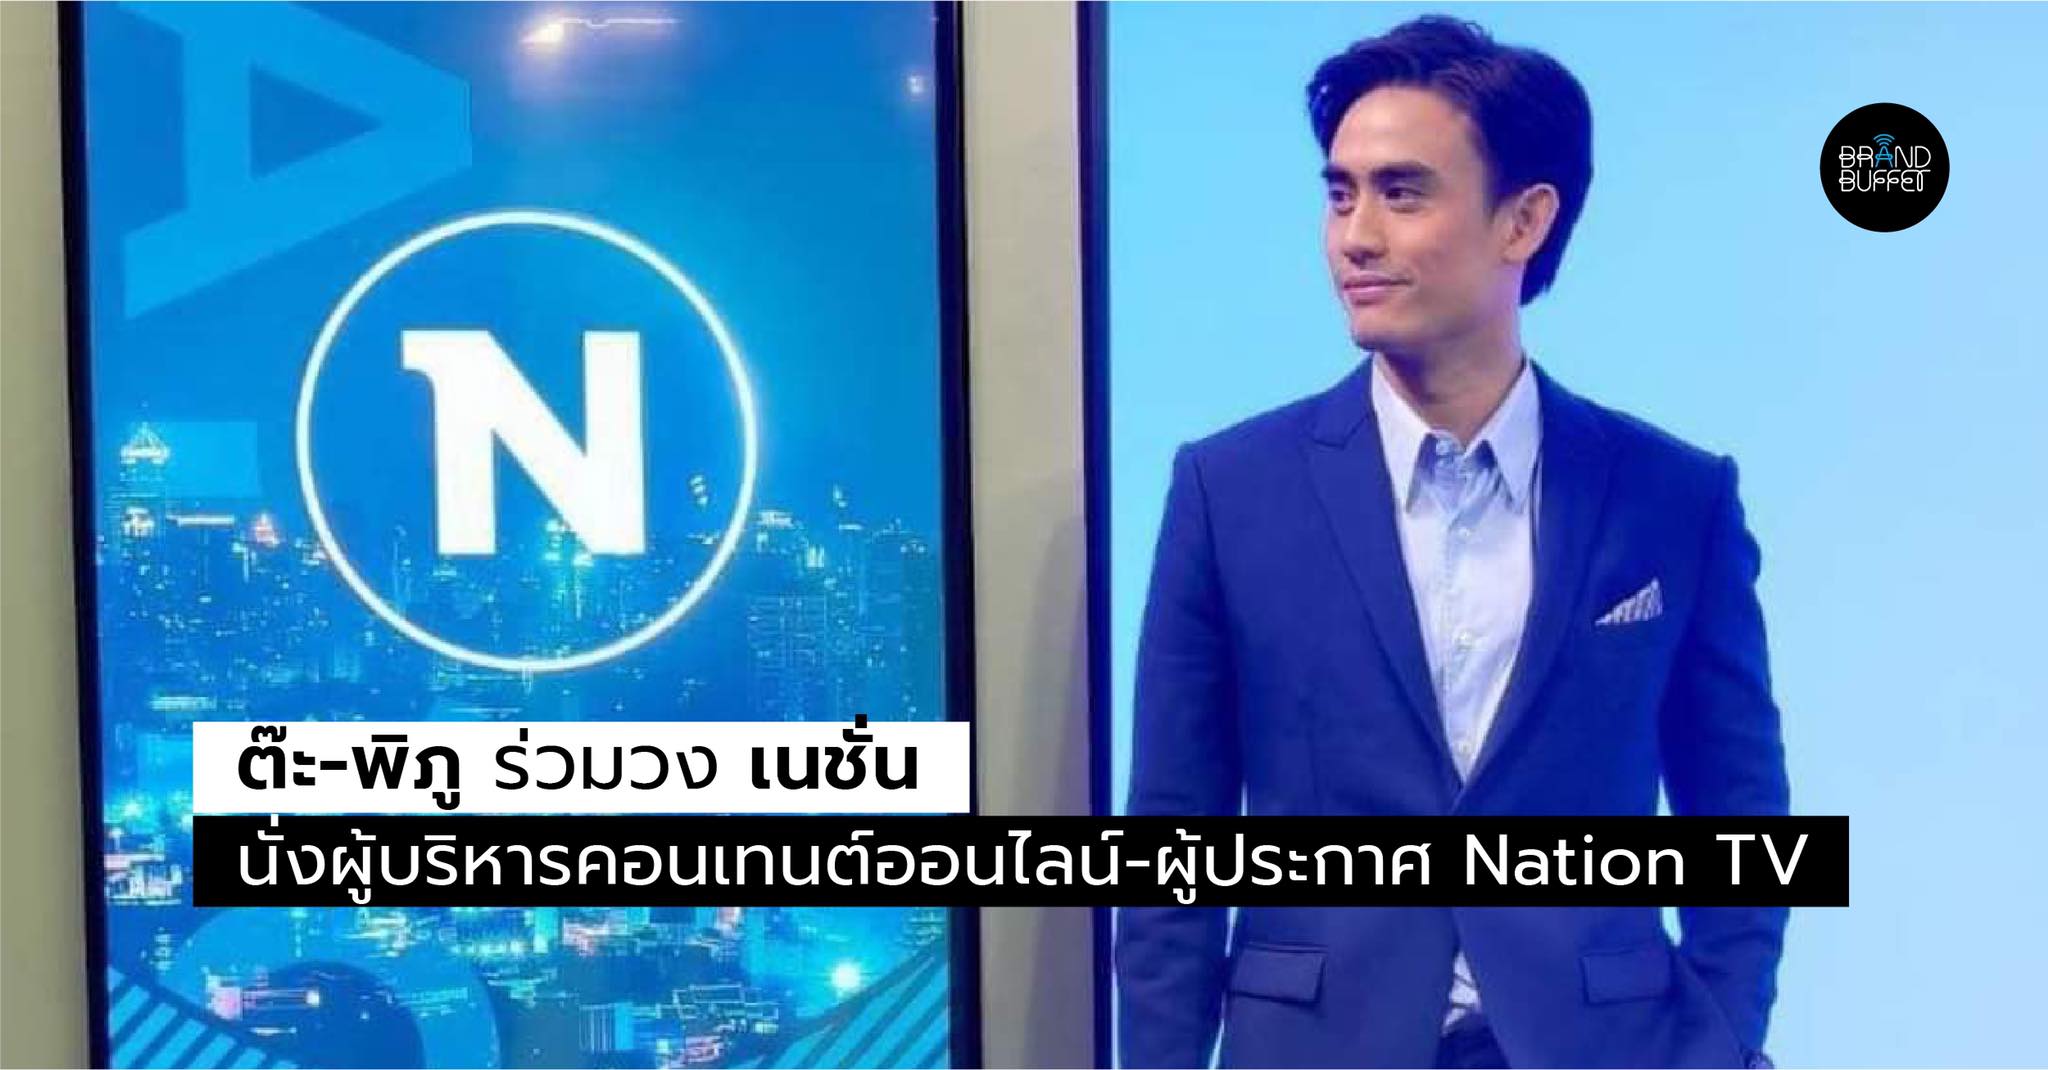 Nation TV announced news anchors